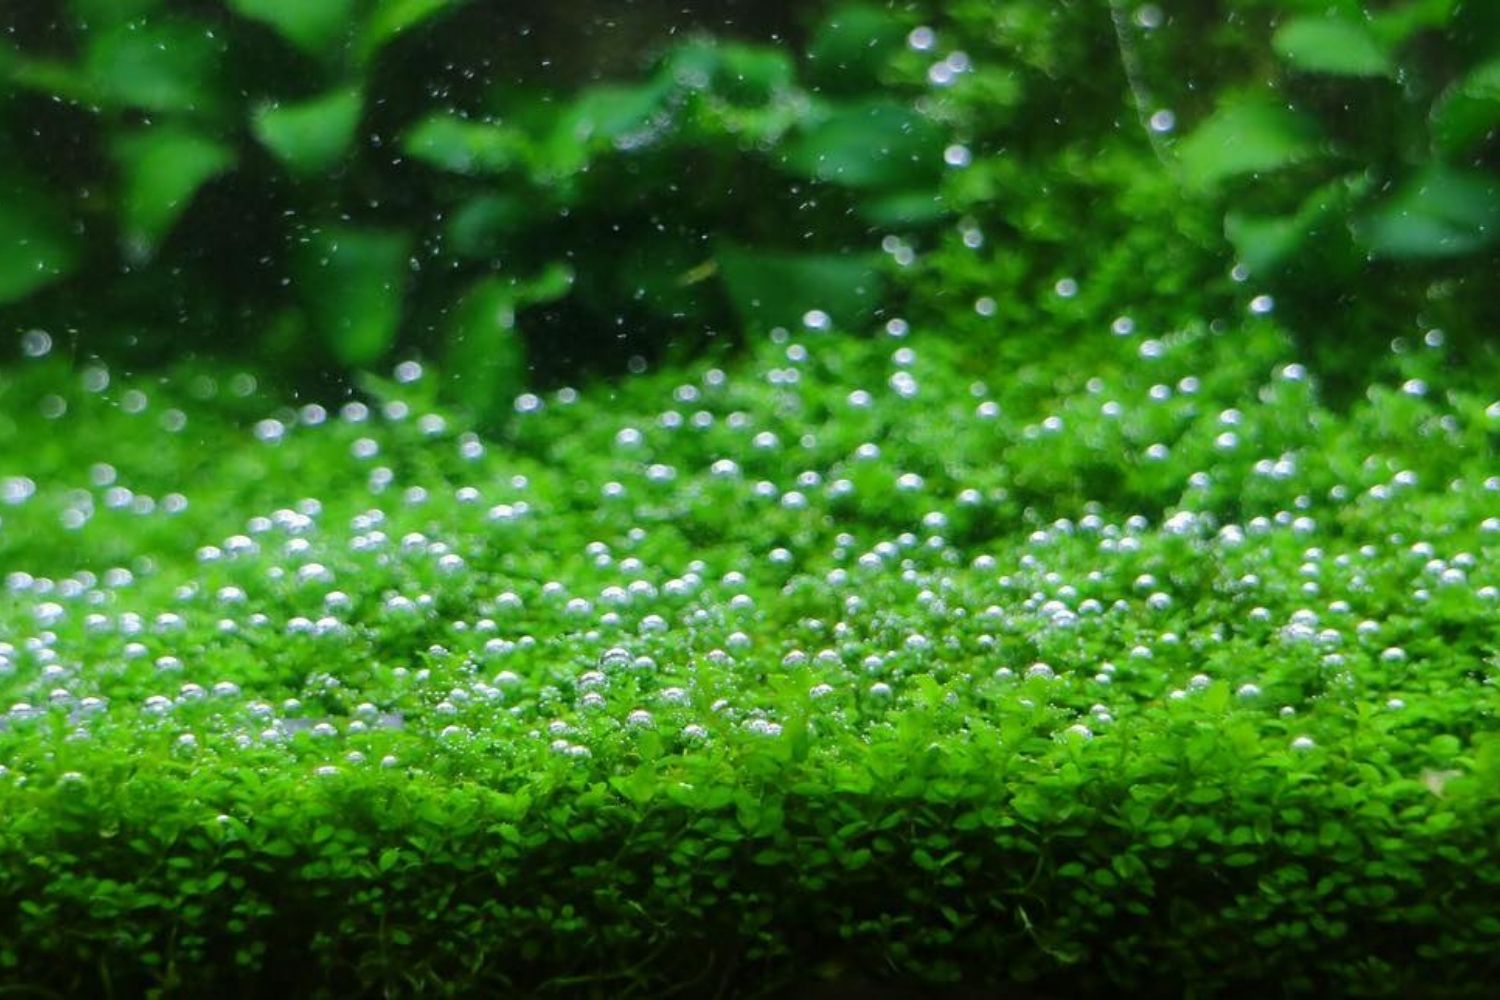 Dwarf Baby Tears Aquarium Plant Grow - Hemianthus callitrichoides